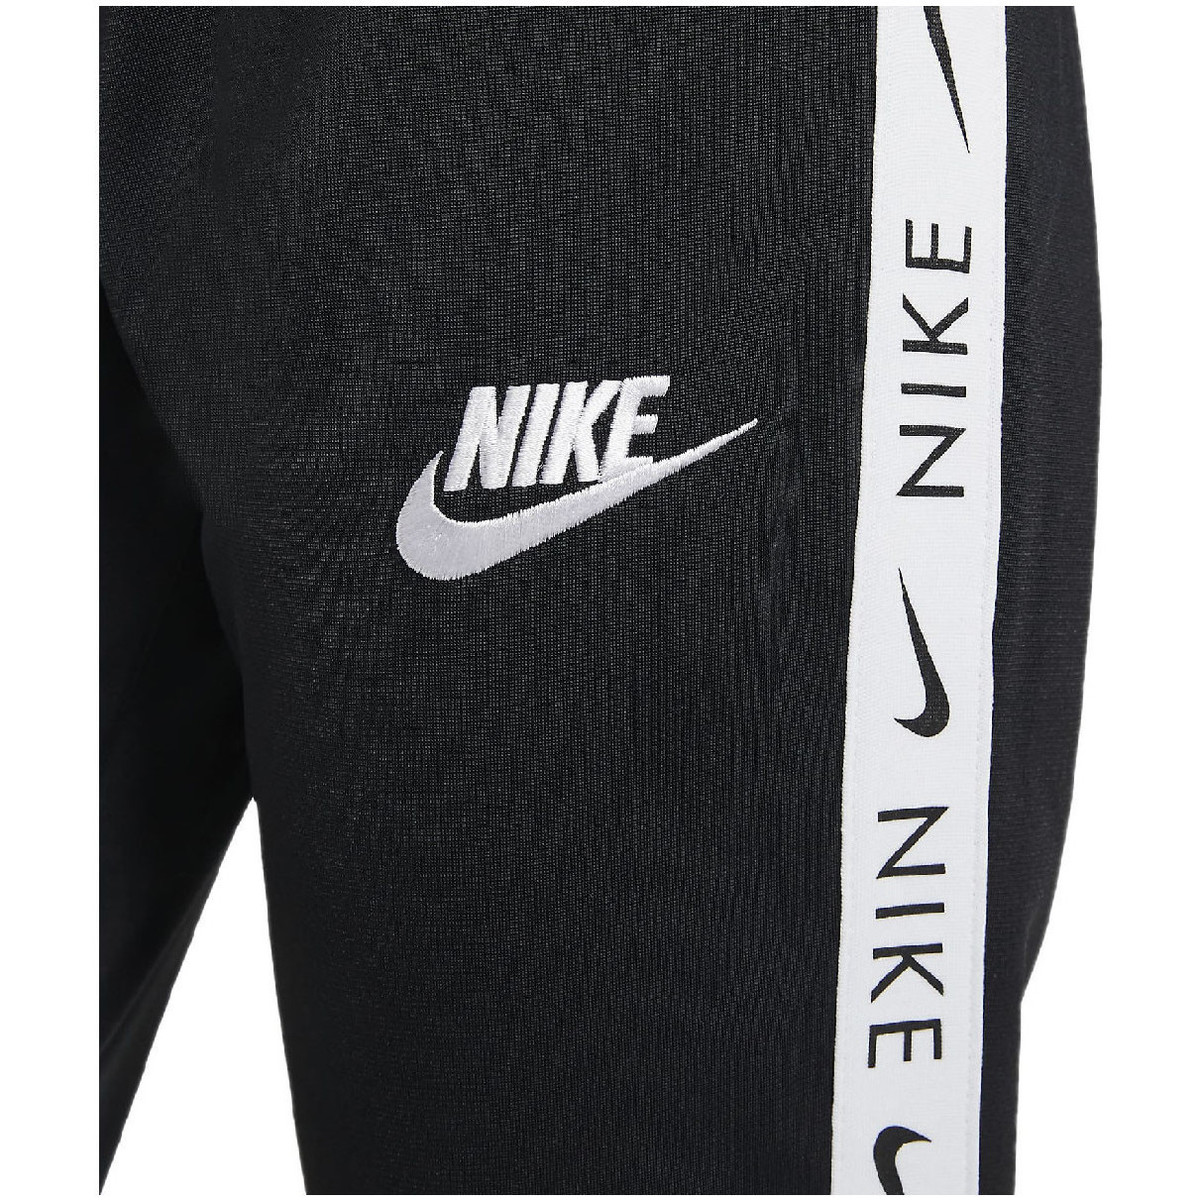 Nike Noir G NSW TRACK SUITS 6zAPpLkS